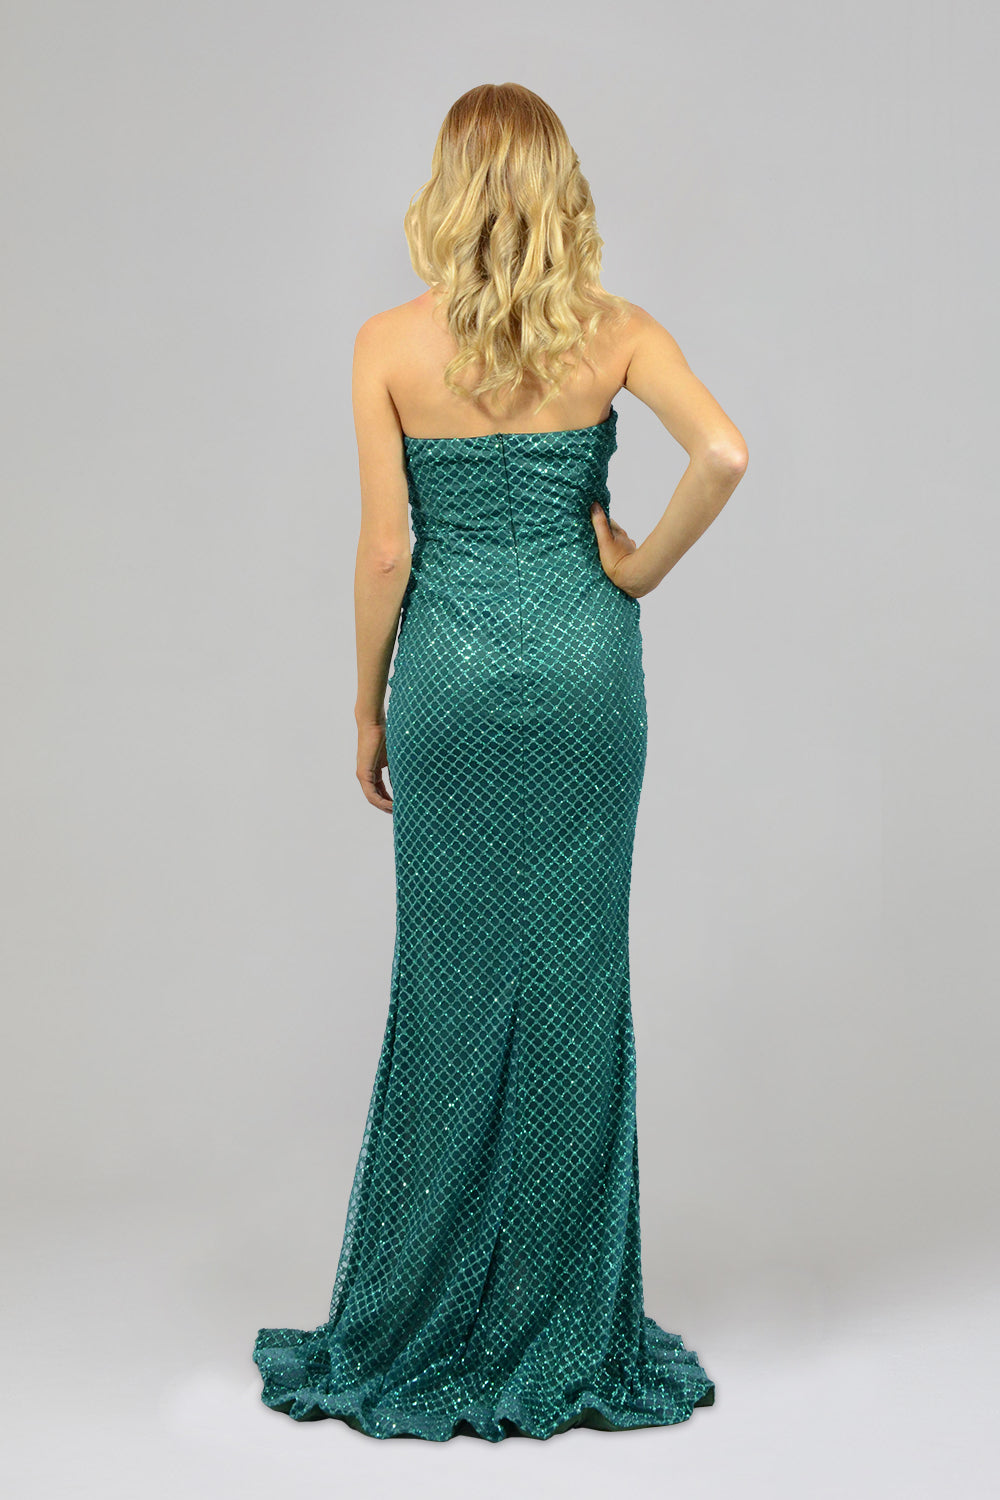 sparkly emerald glitter evening dress australia custom made envious bridal 